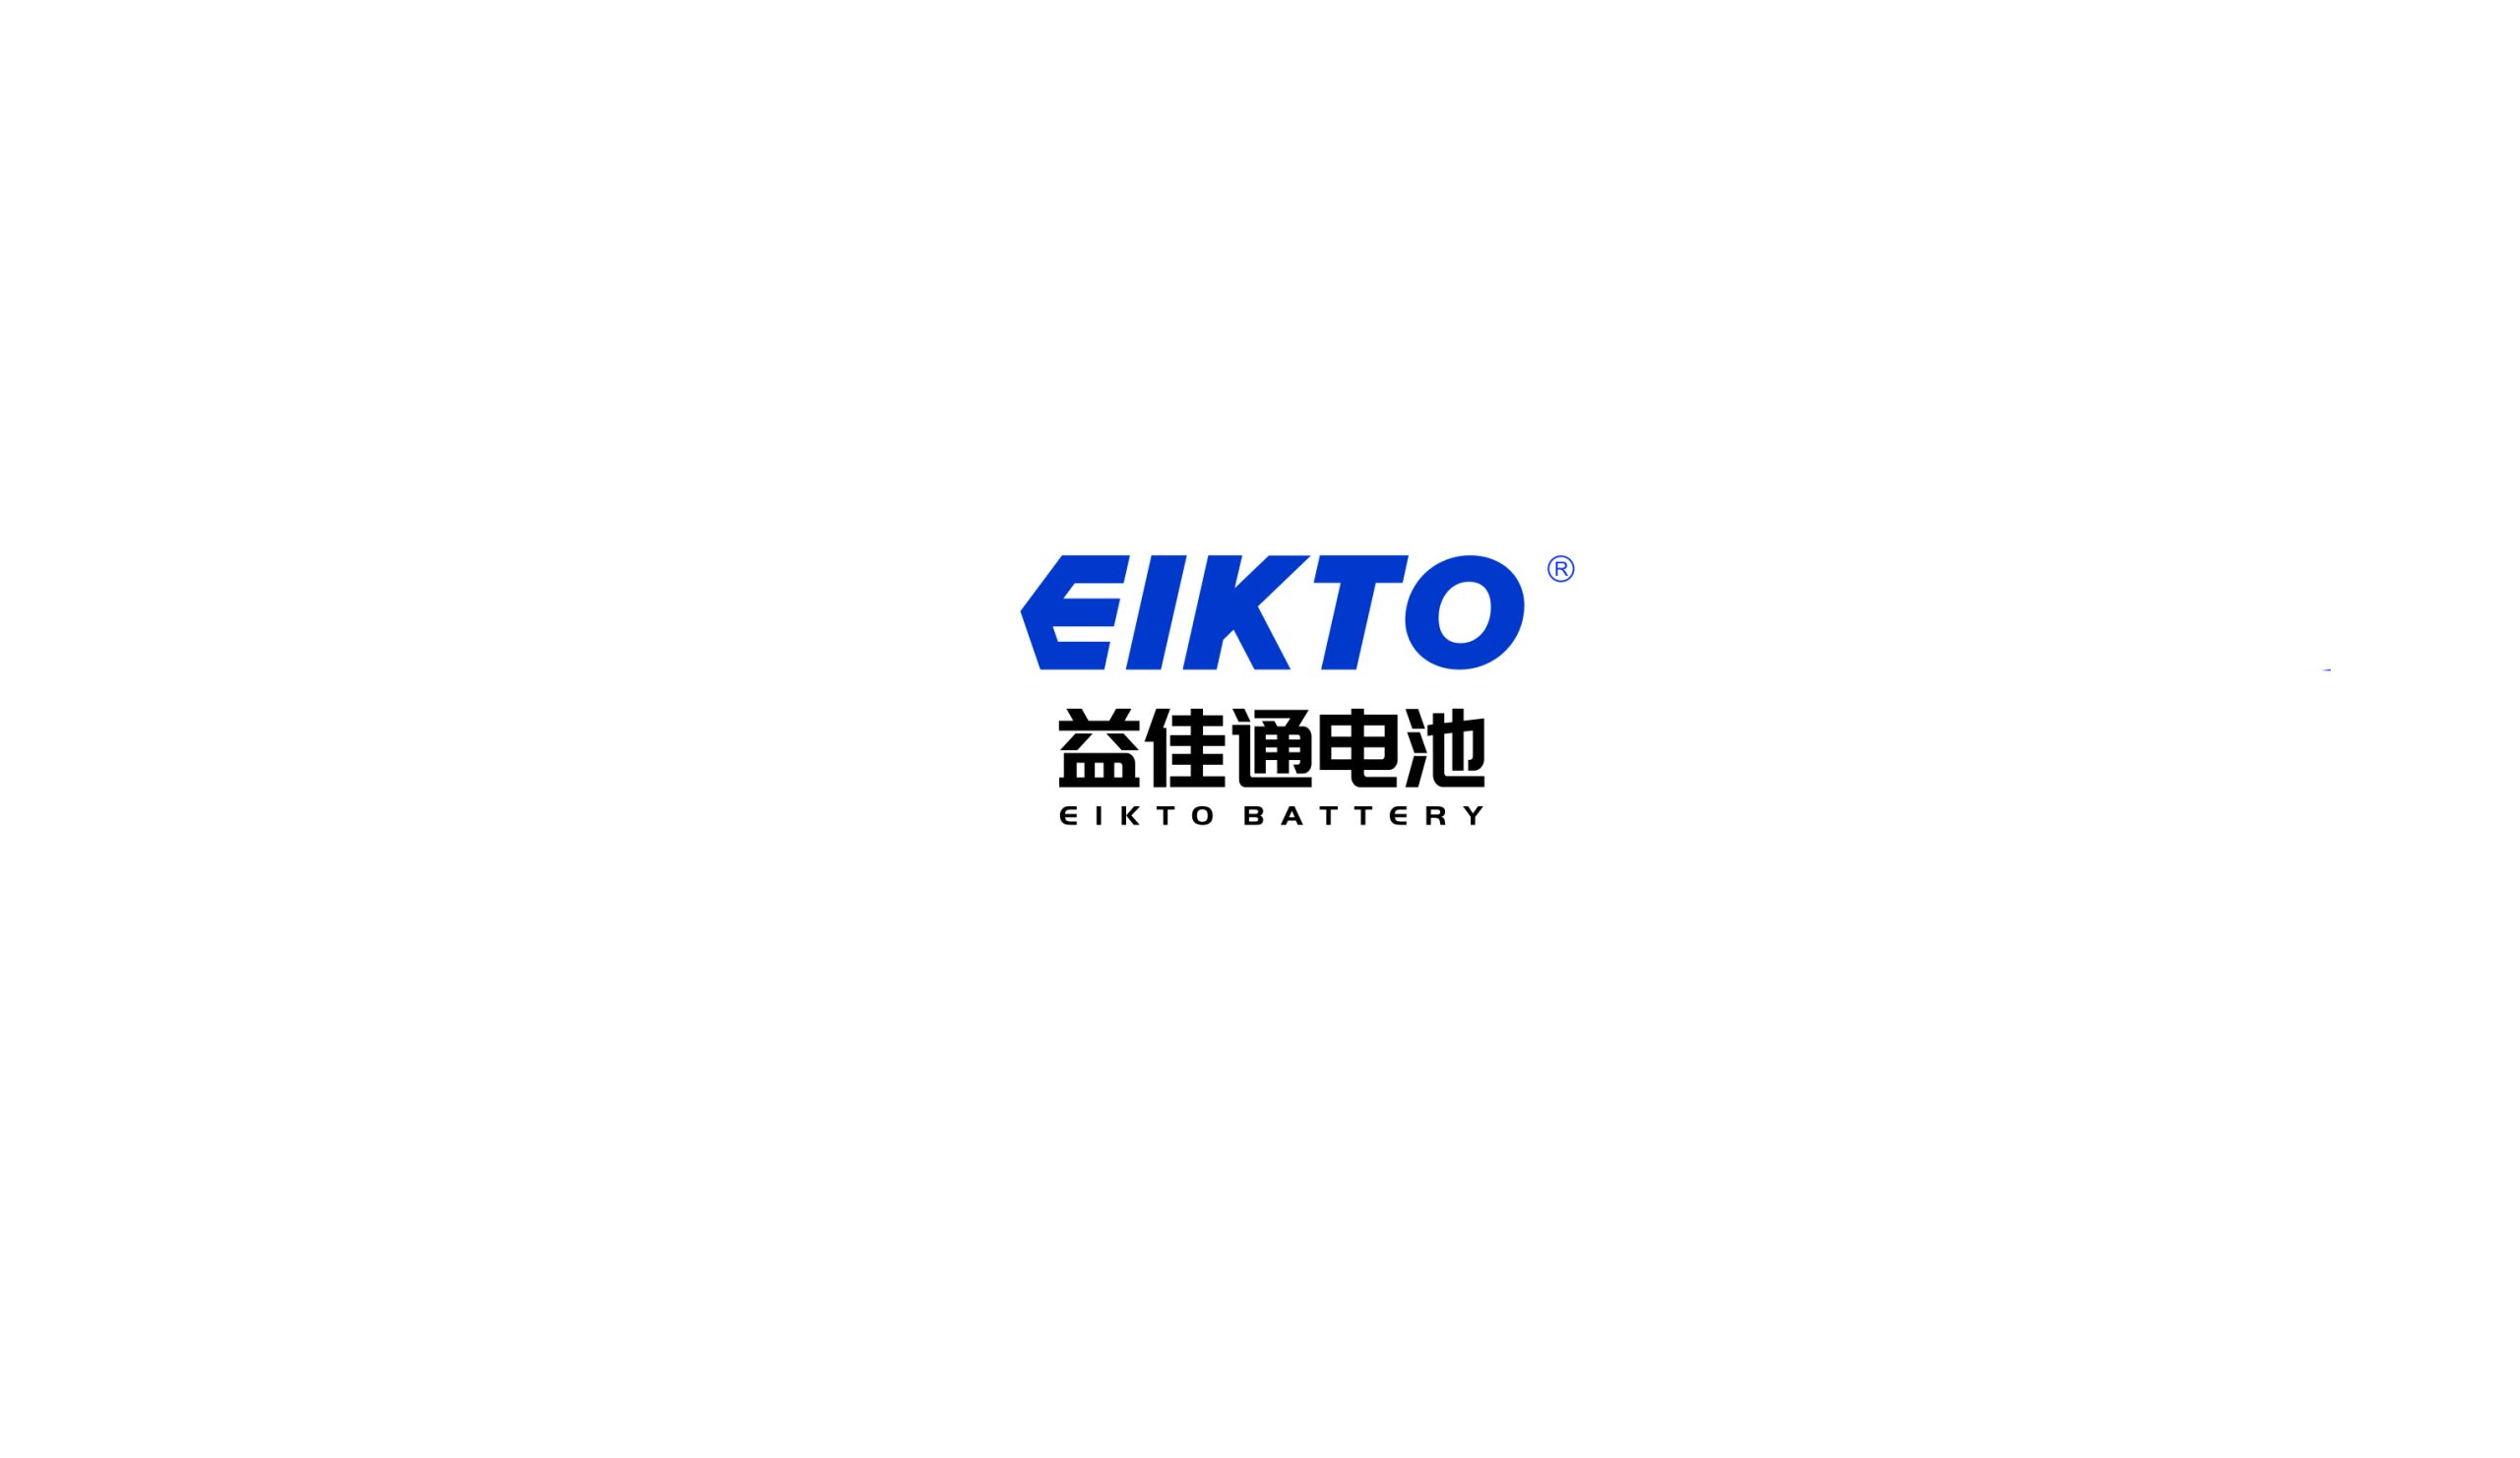 Profile image for Anhui EIKTO Battery Co., Ltd